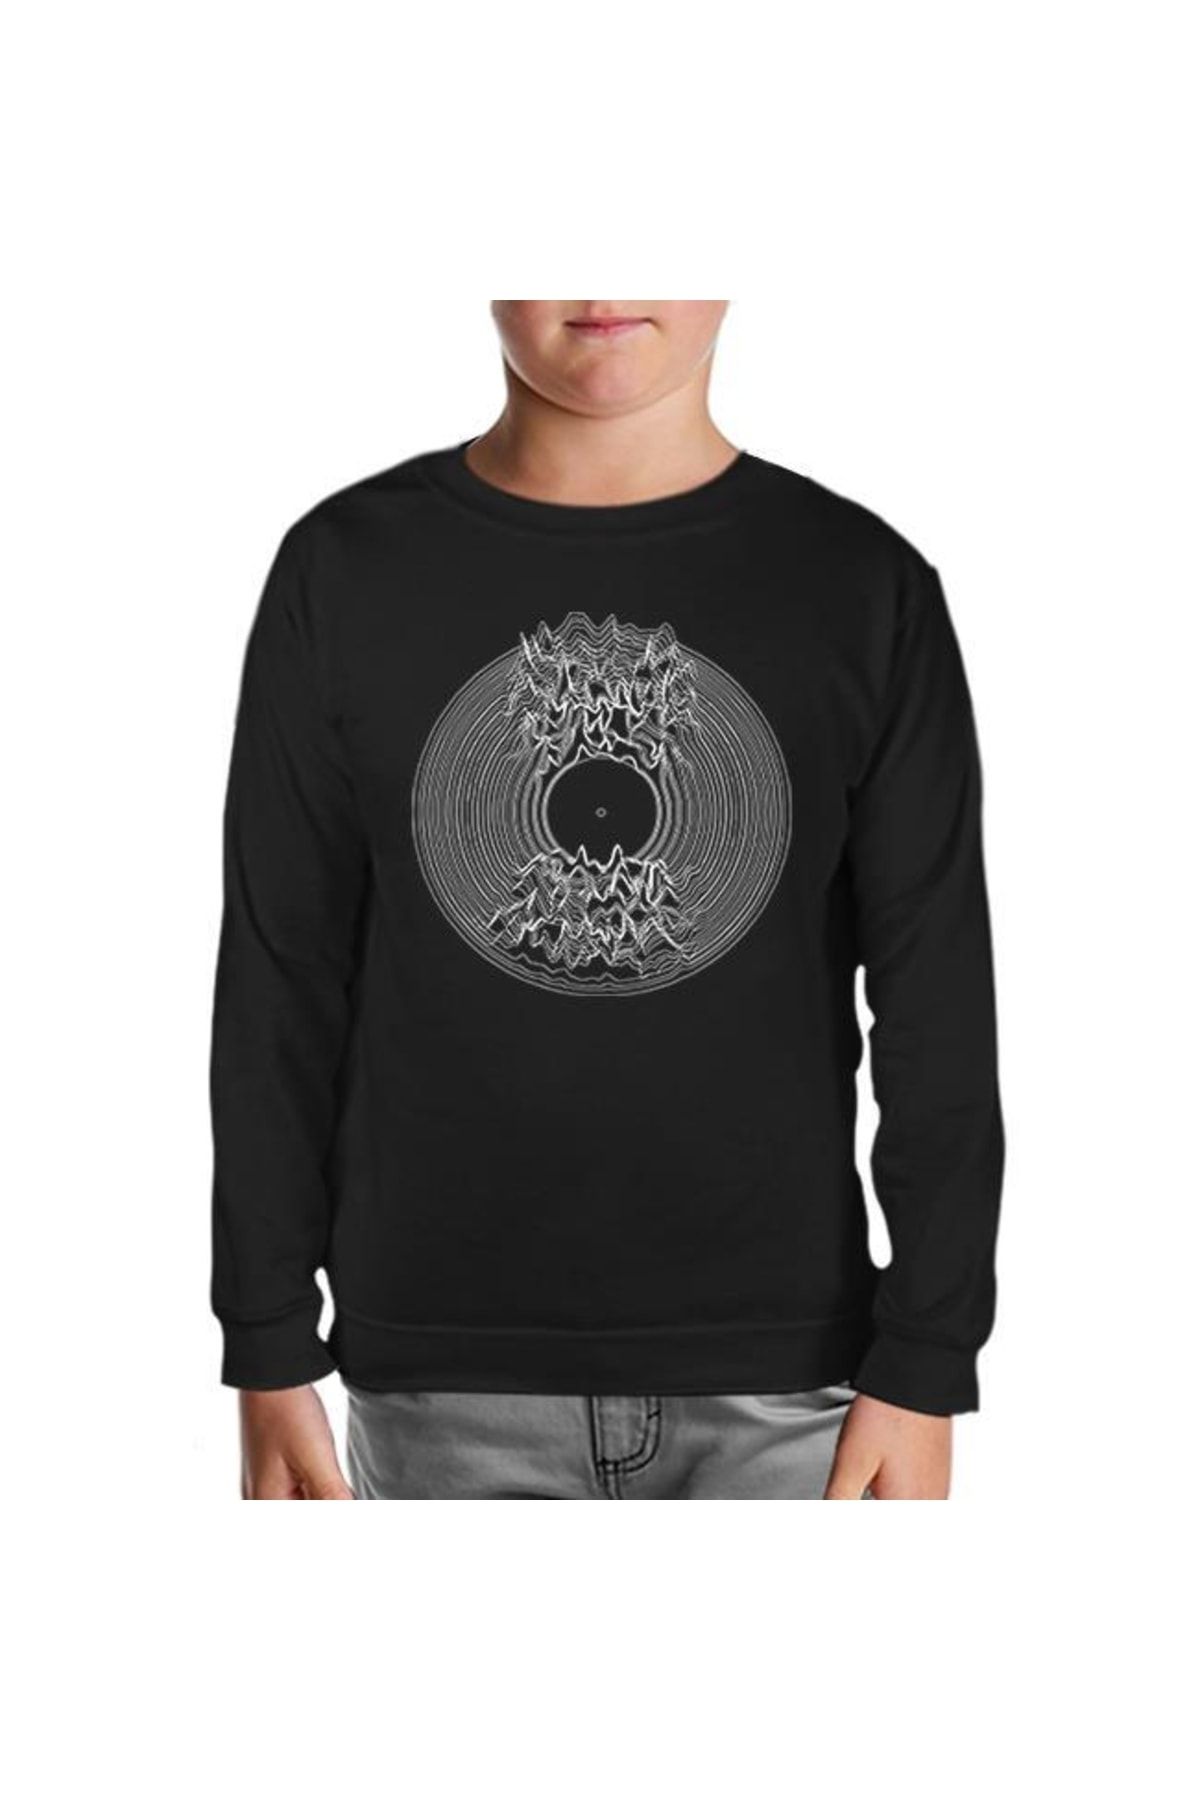 Lord T-Shirt Waves On A Vinyl Siyah Çocuk Sweatshirt